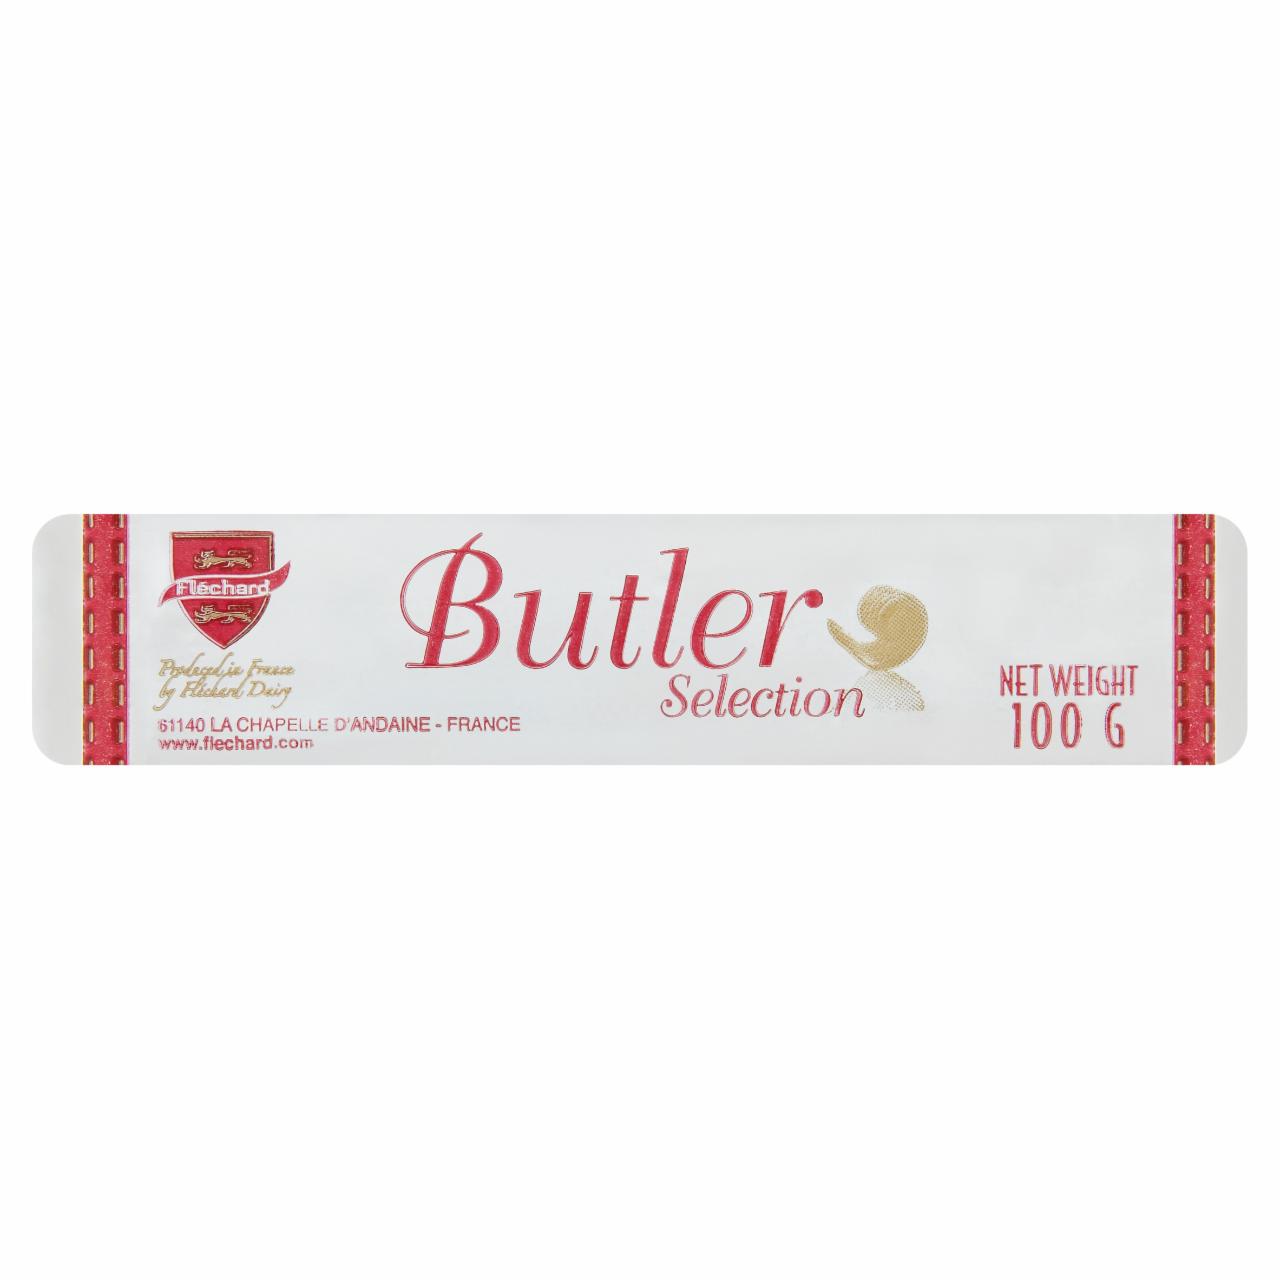 Képek - Butler Selection zsírkeverék 100 g